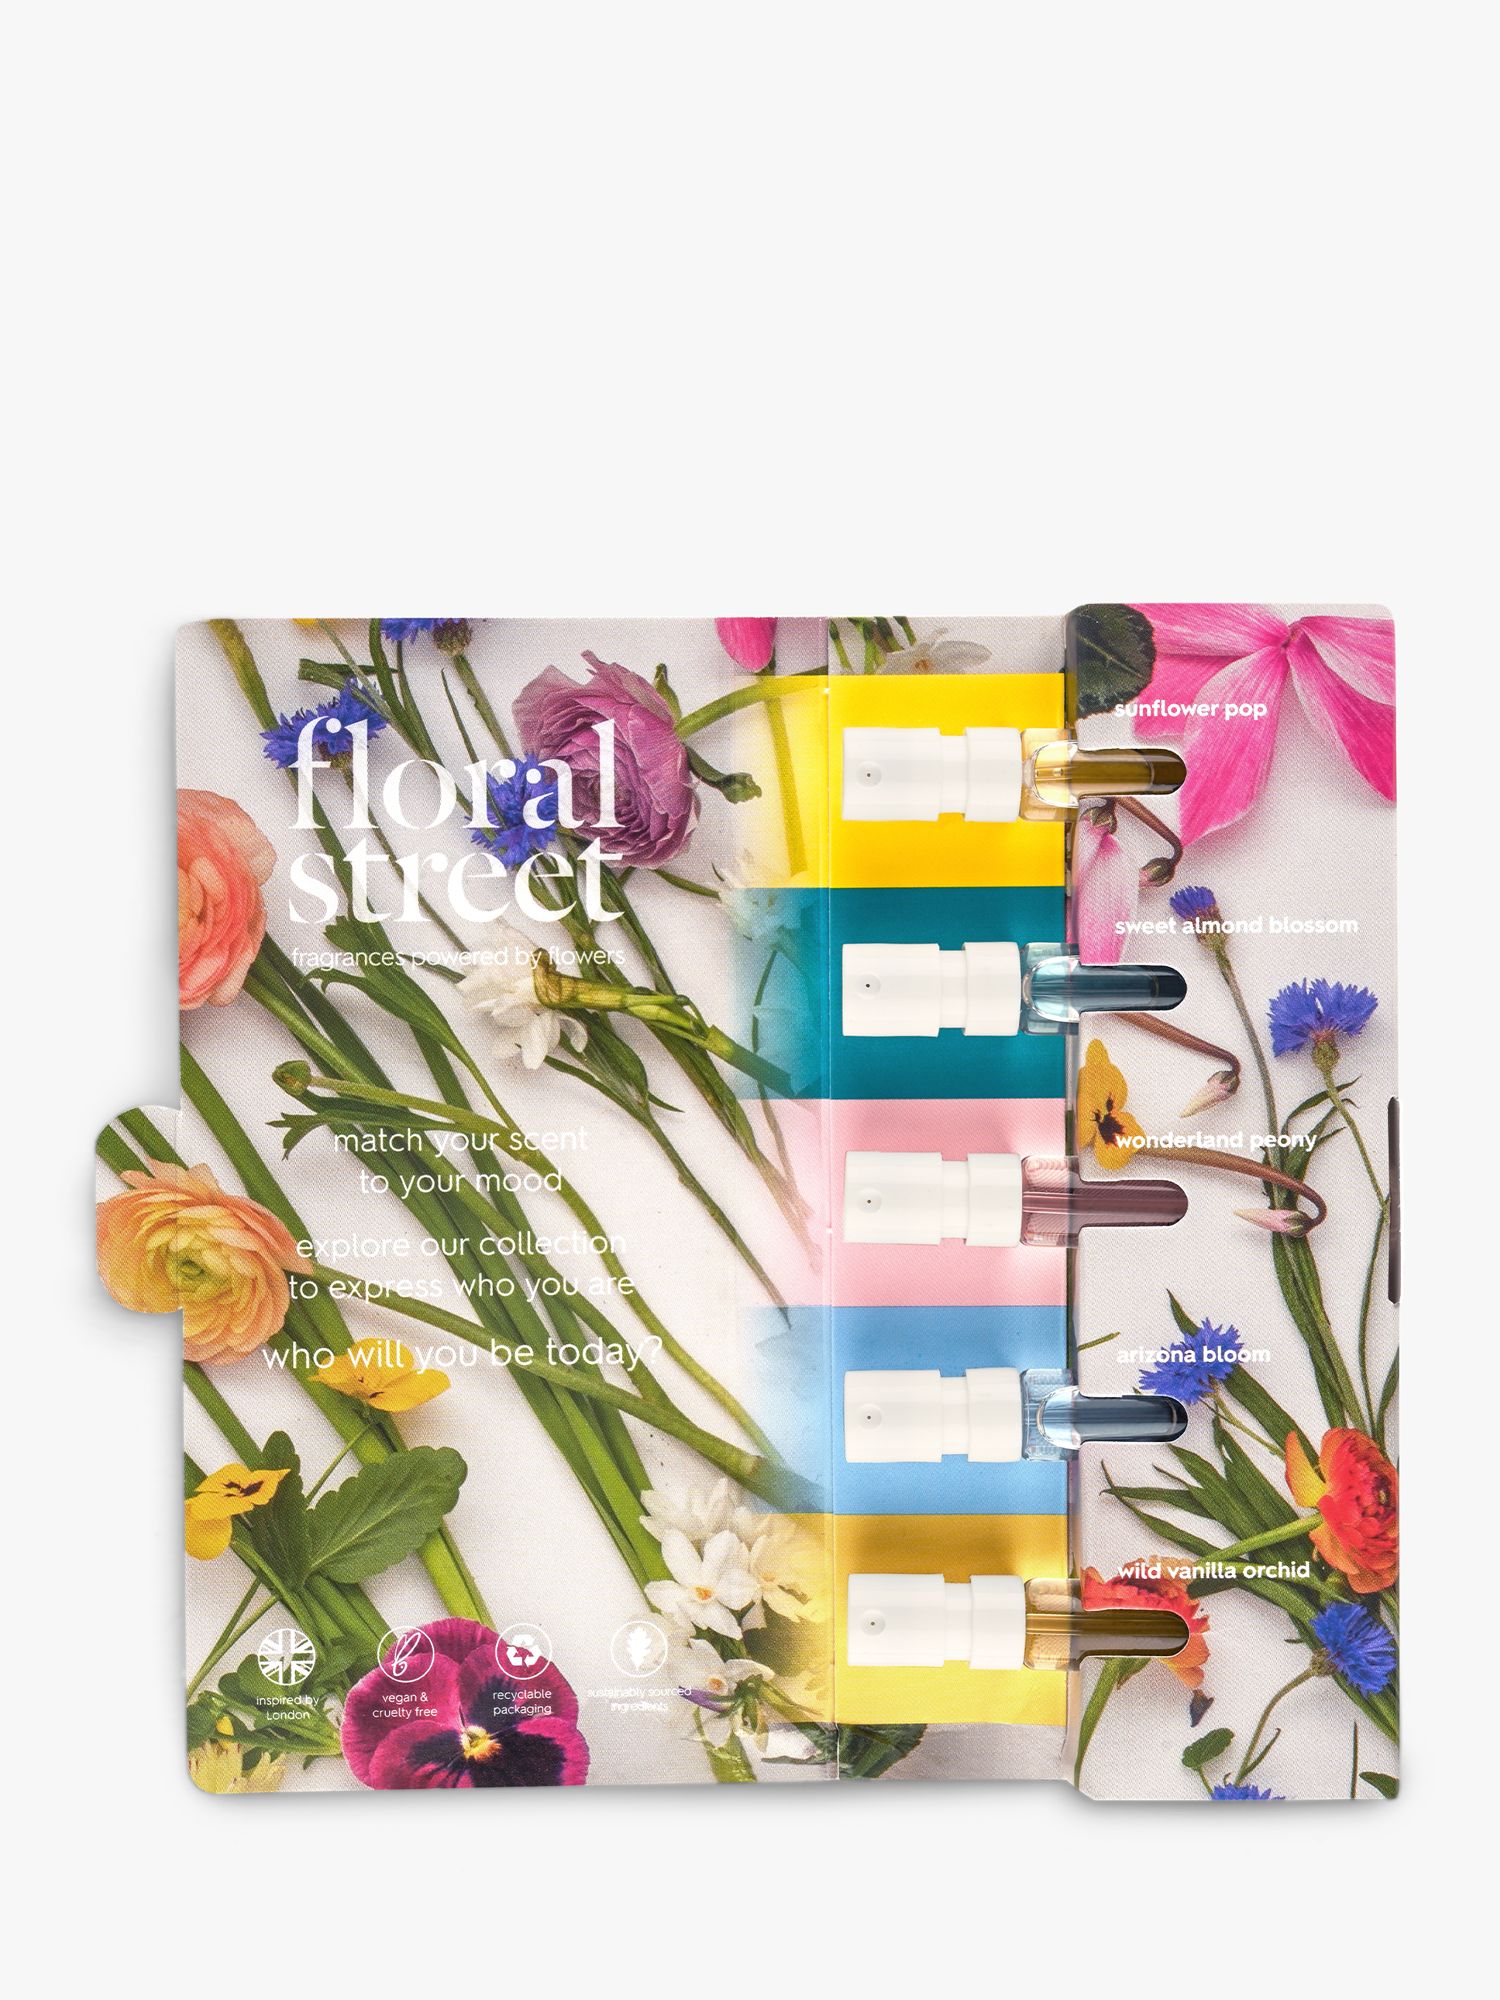 Floral Street Discovery Eau de Parfum Fragrance Gift Set, 5 x 2ml 1